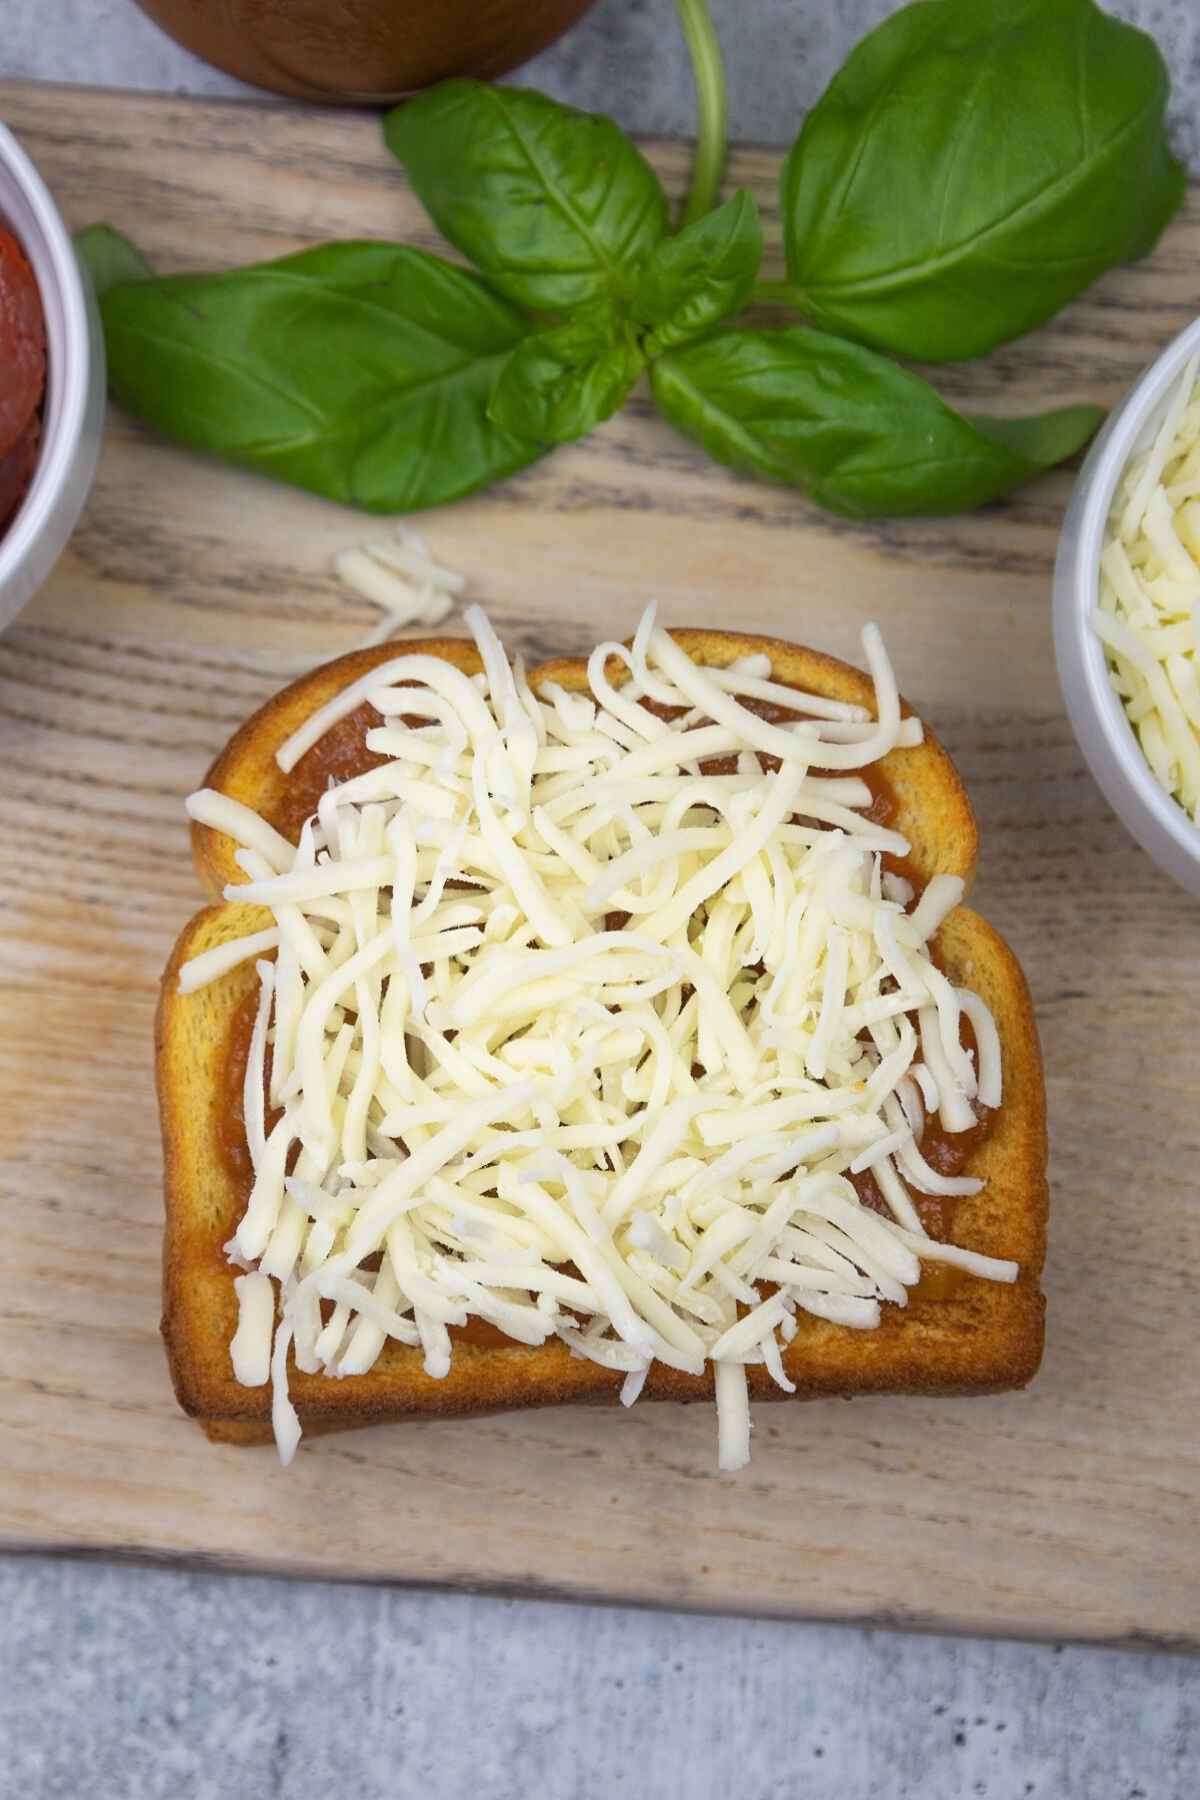 The shredded mozzarella cheese layer.